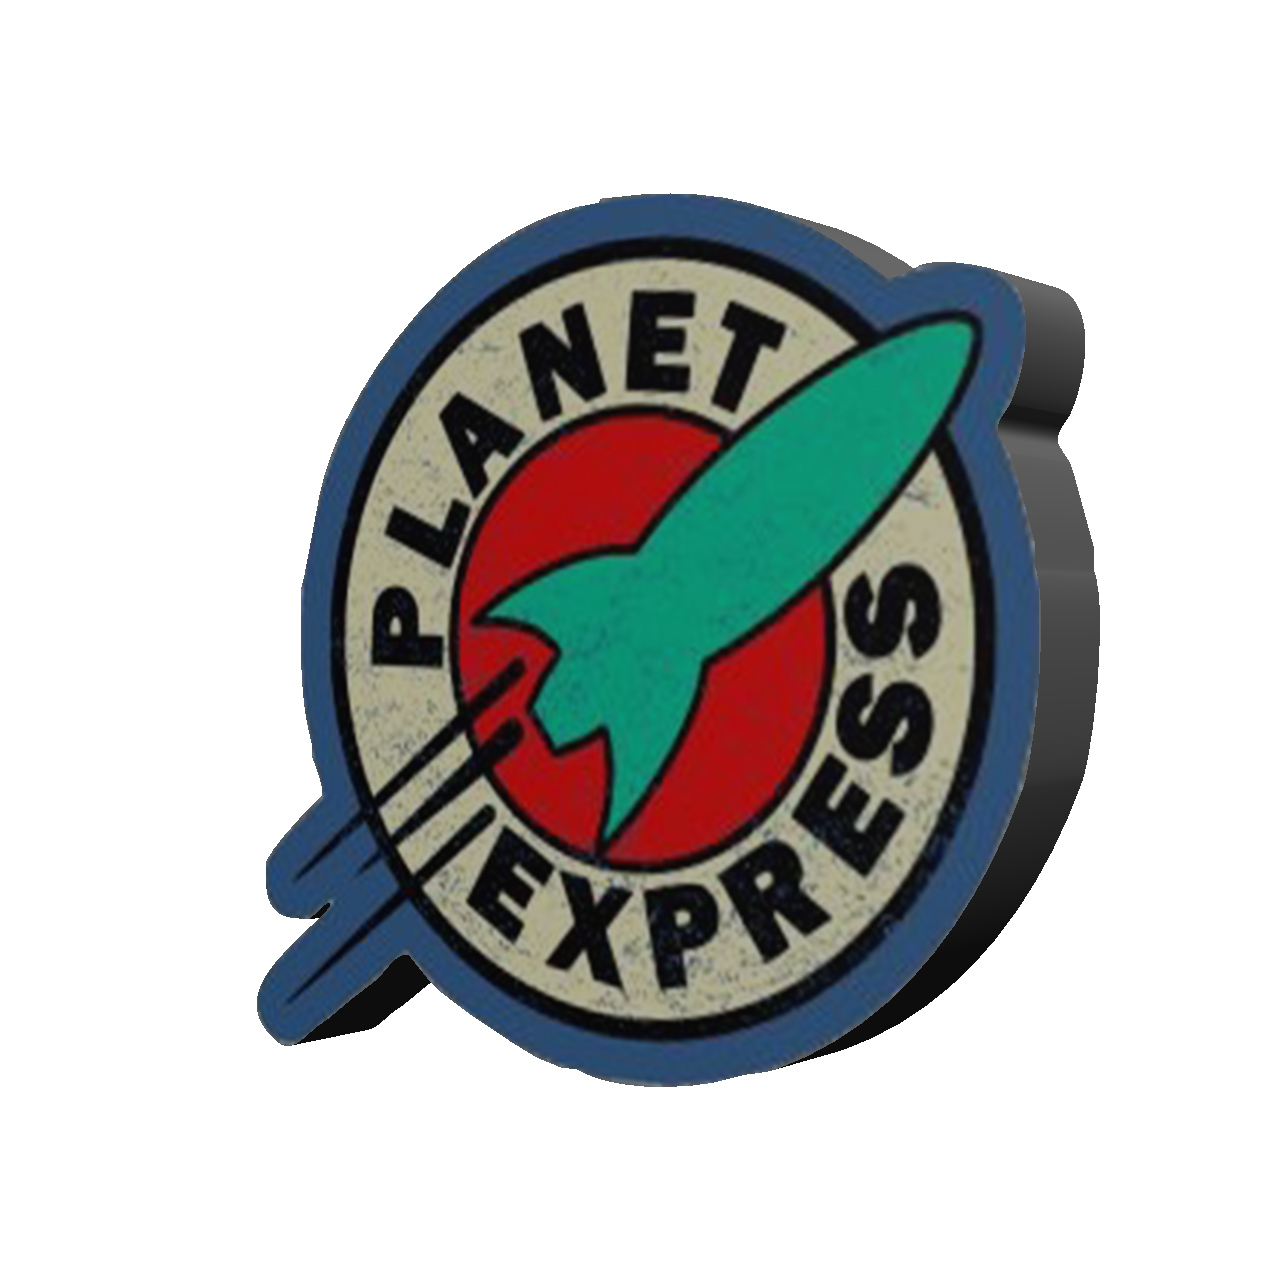 پیکسل مدل Planet Expres کد 159